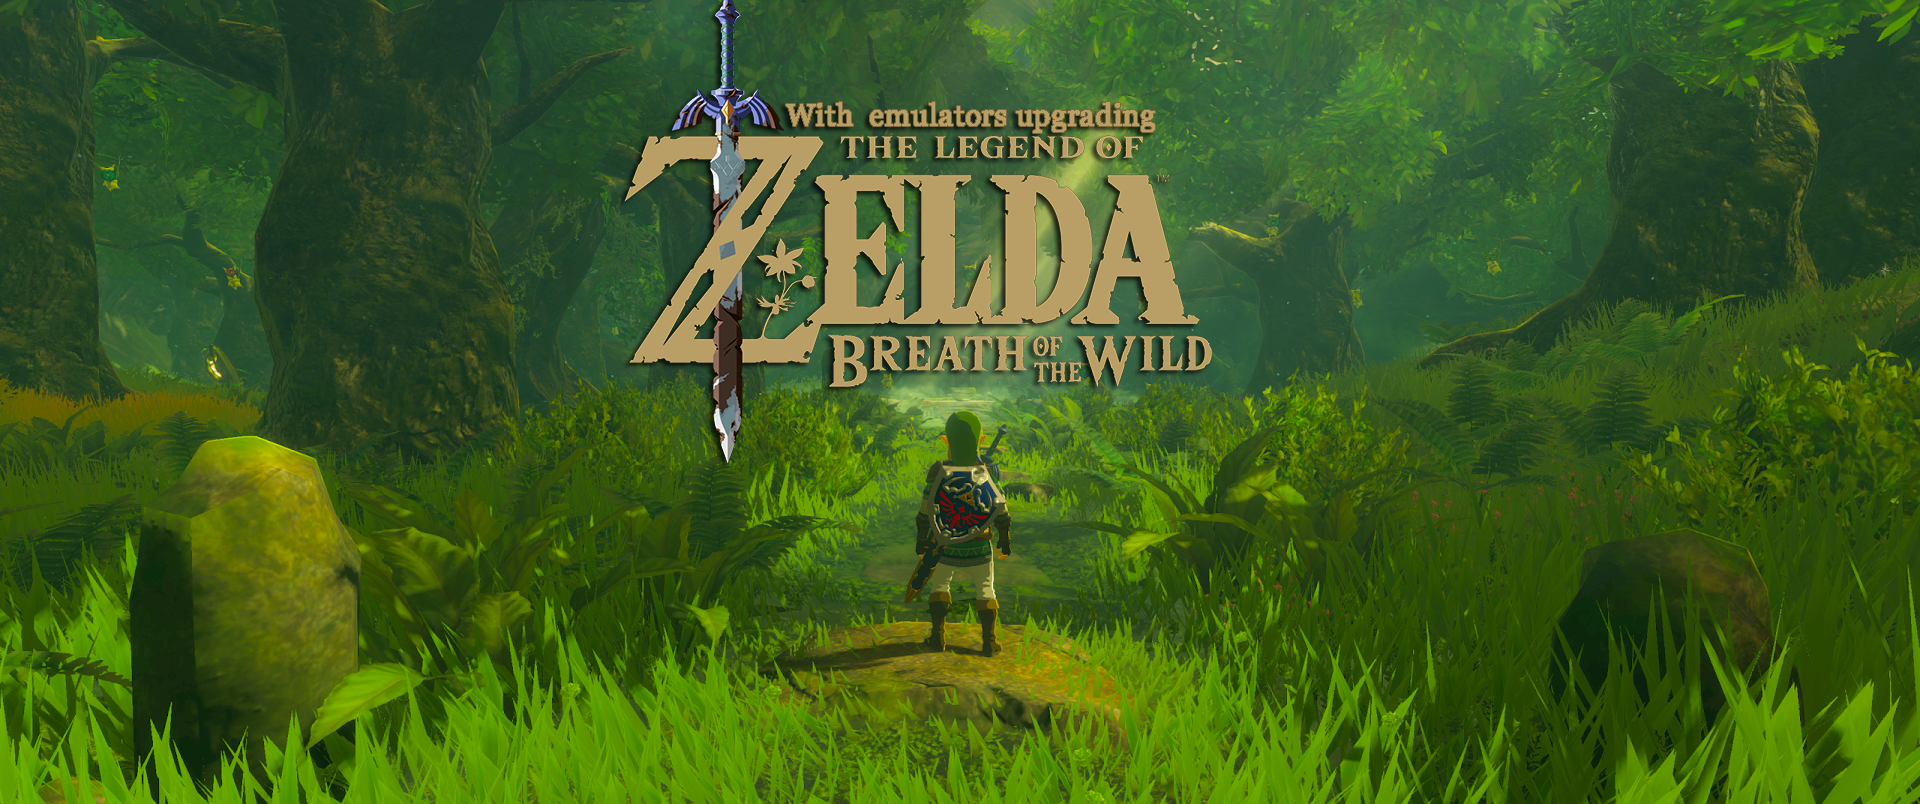 Breath of the Wild' Is Already Running On PC Emulators